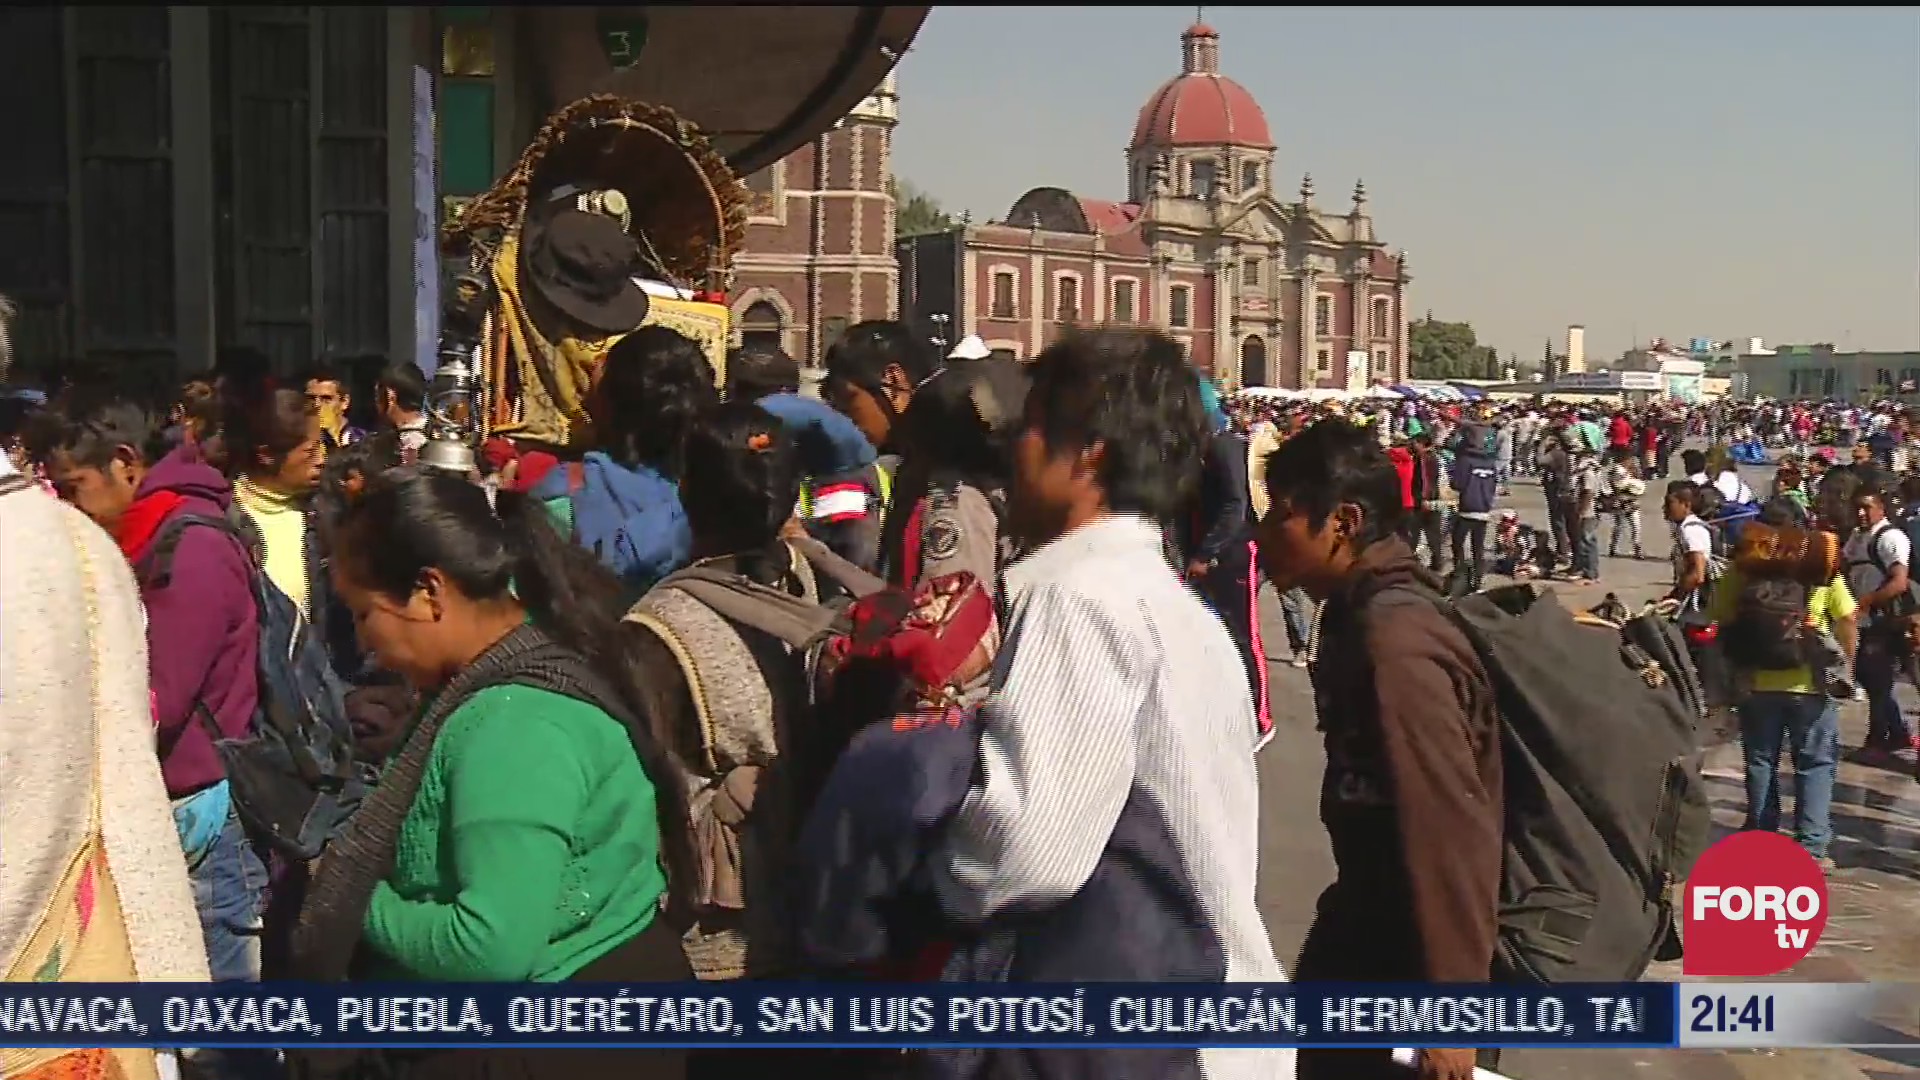 no habra peregrinaciones a la basilica de guadalupe el proximo 12 de diciembre